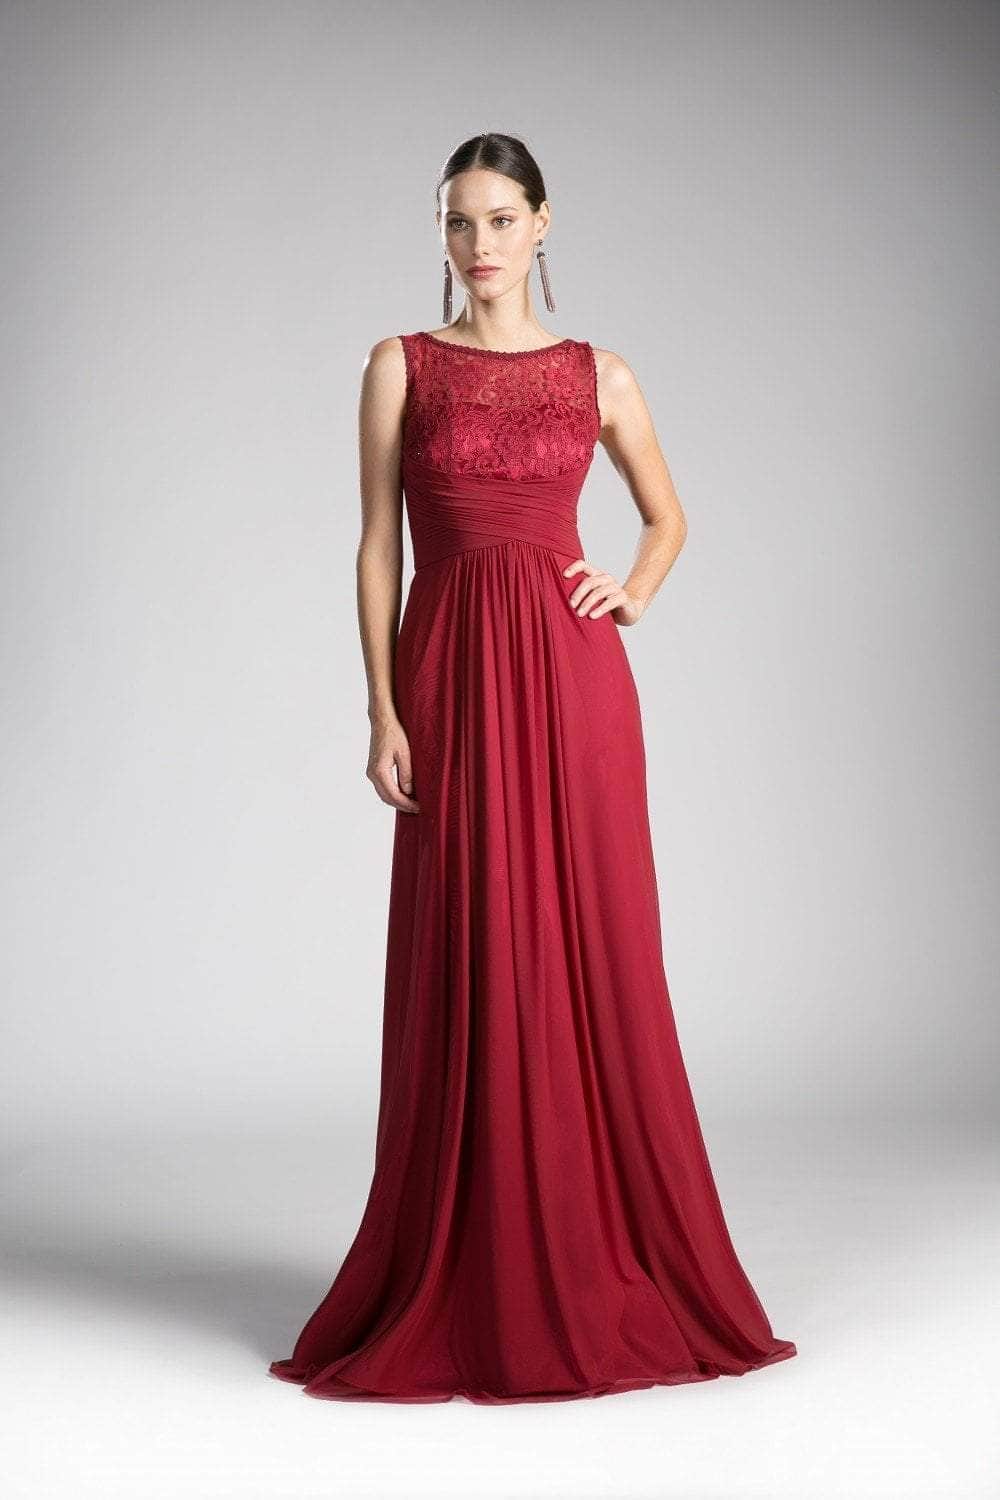 Ladivine CH525 - Sleeveless Empire Waist Gown
